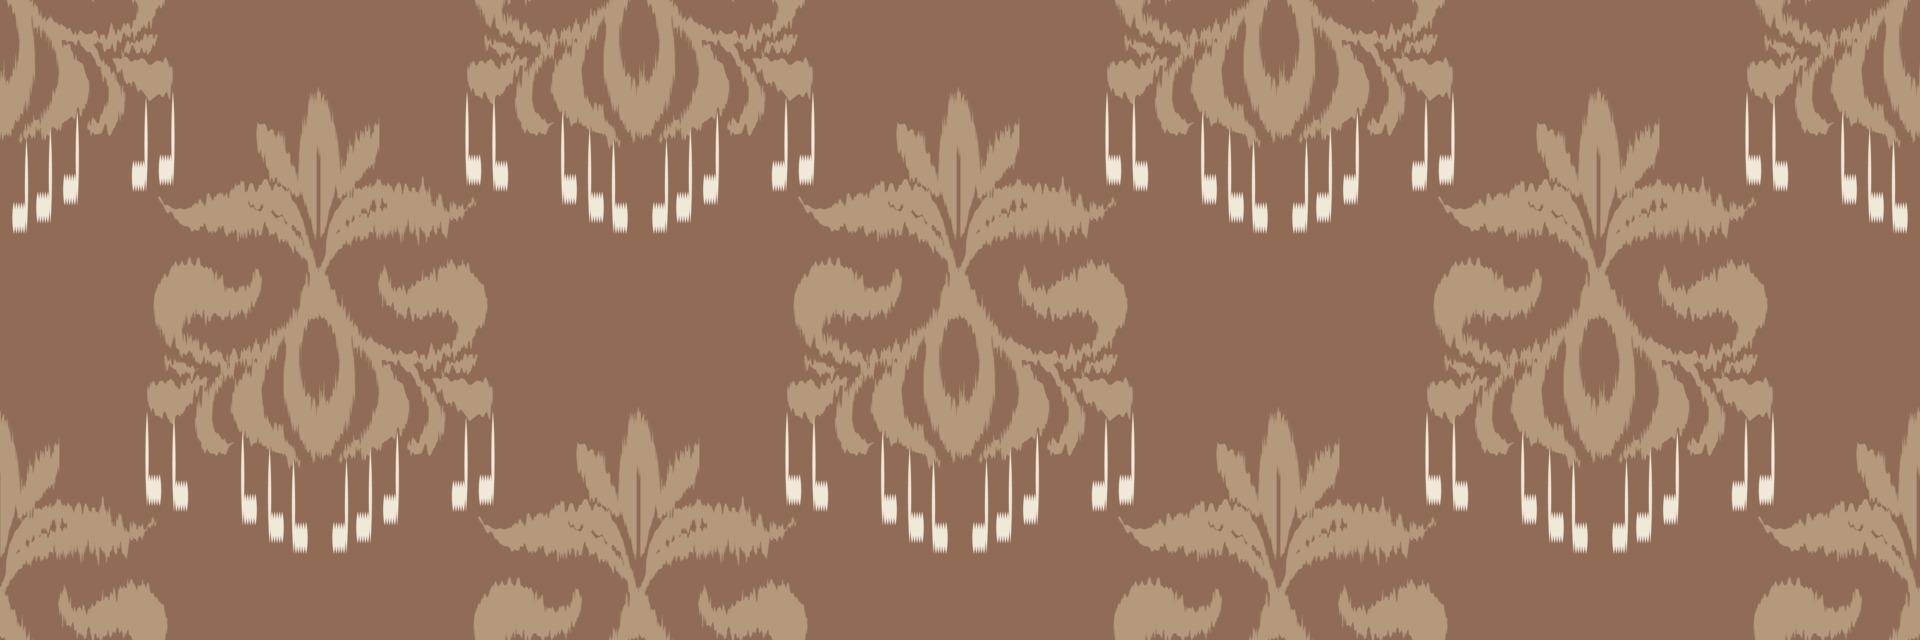 ikat damasco bordado escandinavo, ikat tribal africano sin costuras, estilo antiguo textil digital diseño asiático arte antiguo para estampados tela saree mughal franjas textura kurti kurtis kurtas vector